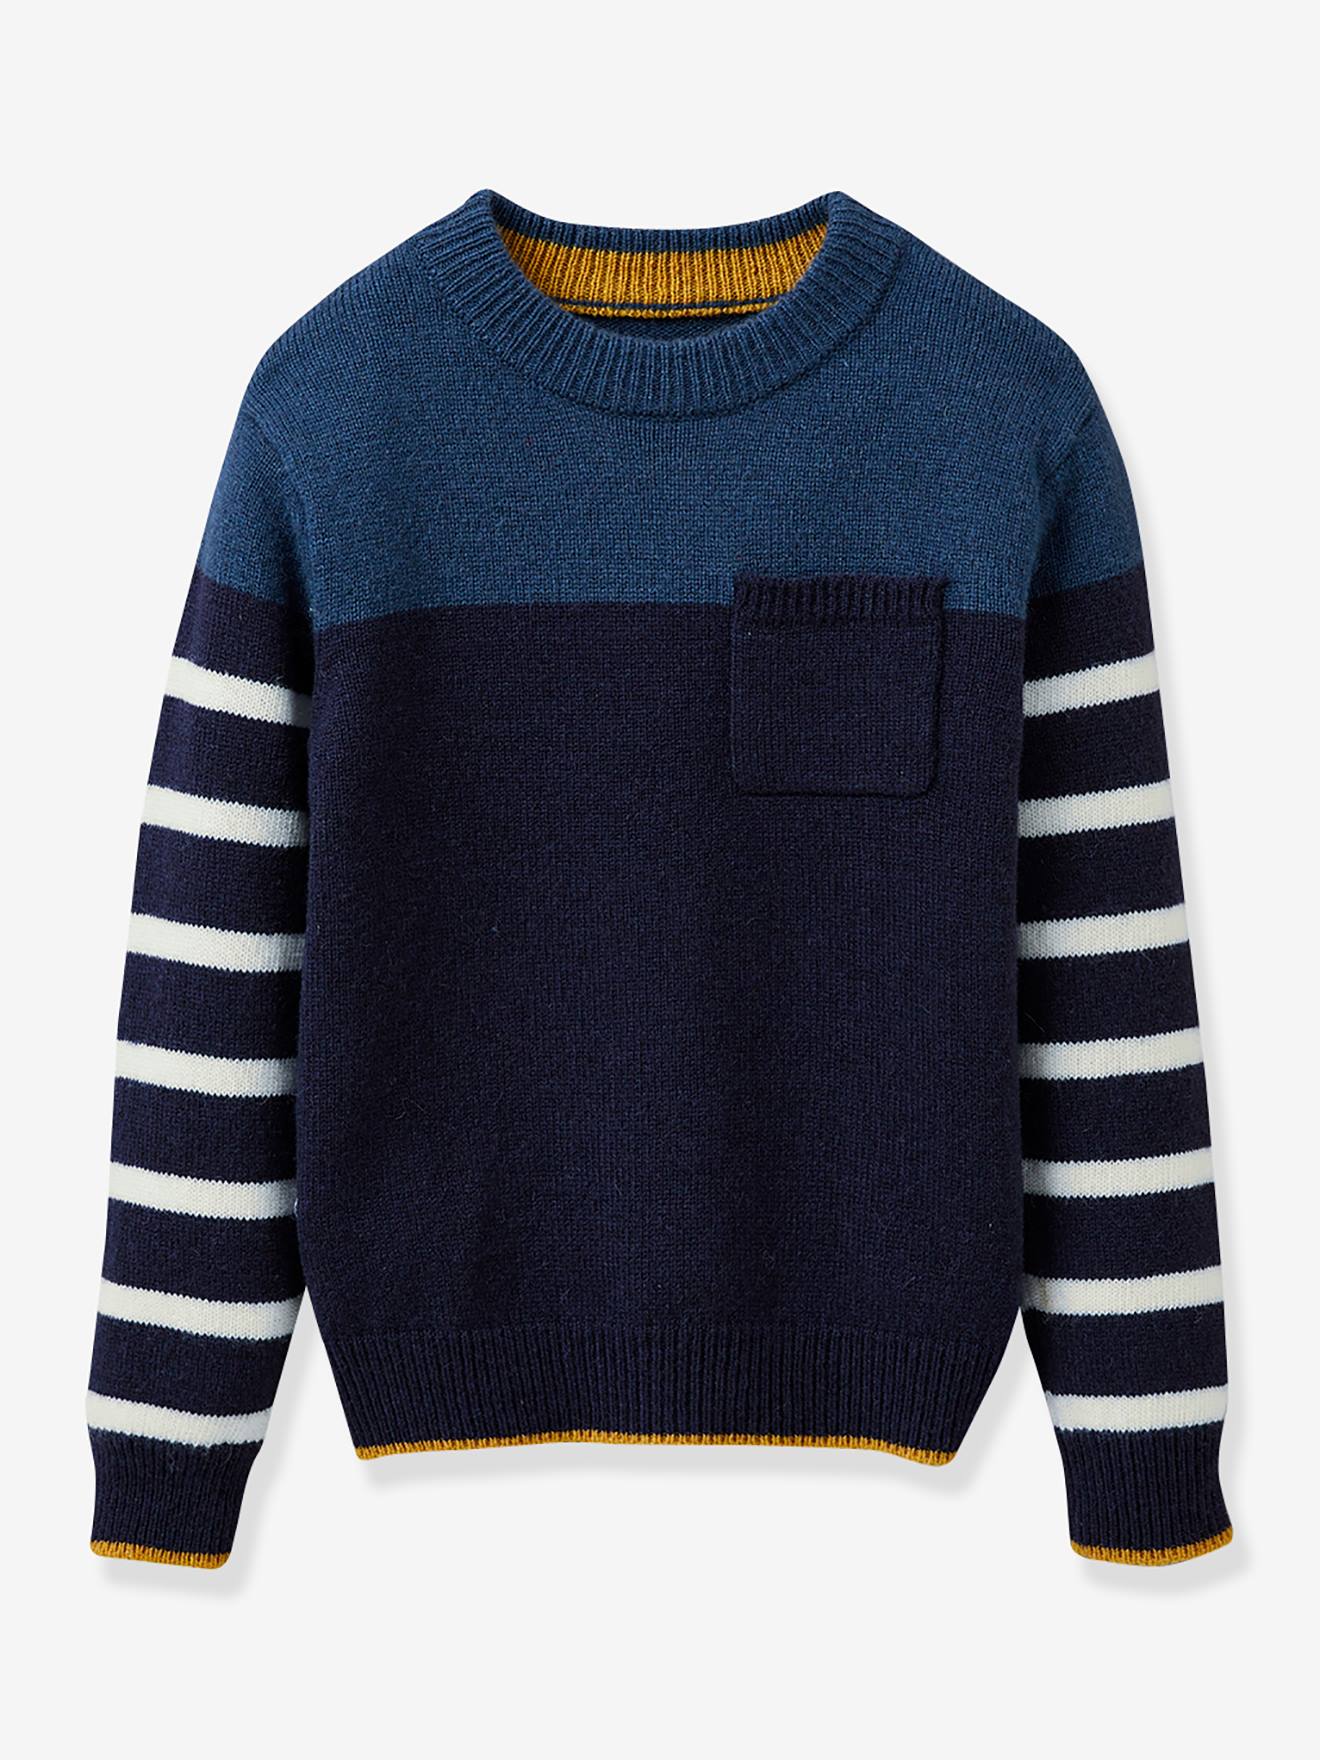 Colourblock trui voor jongens in lamswol CYRILLUS marineblauw